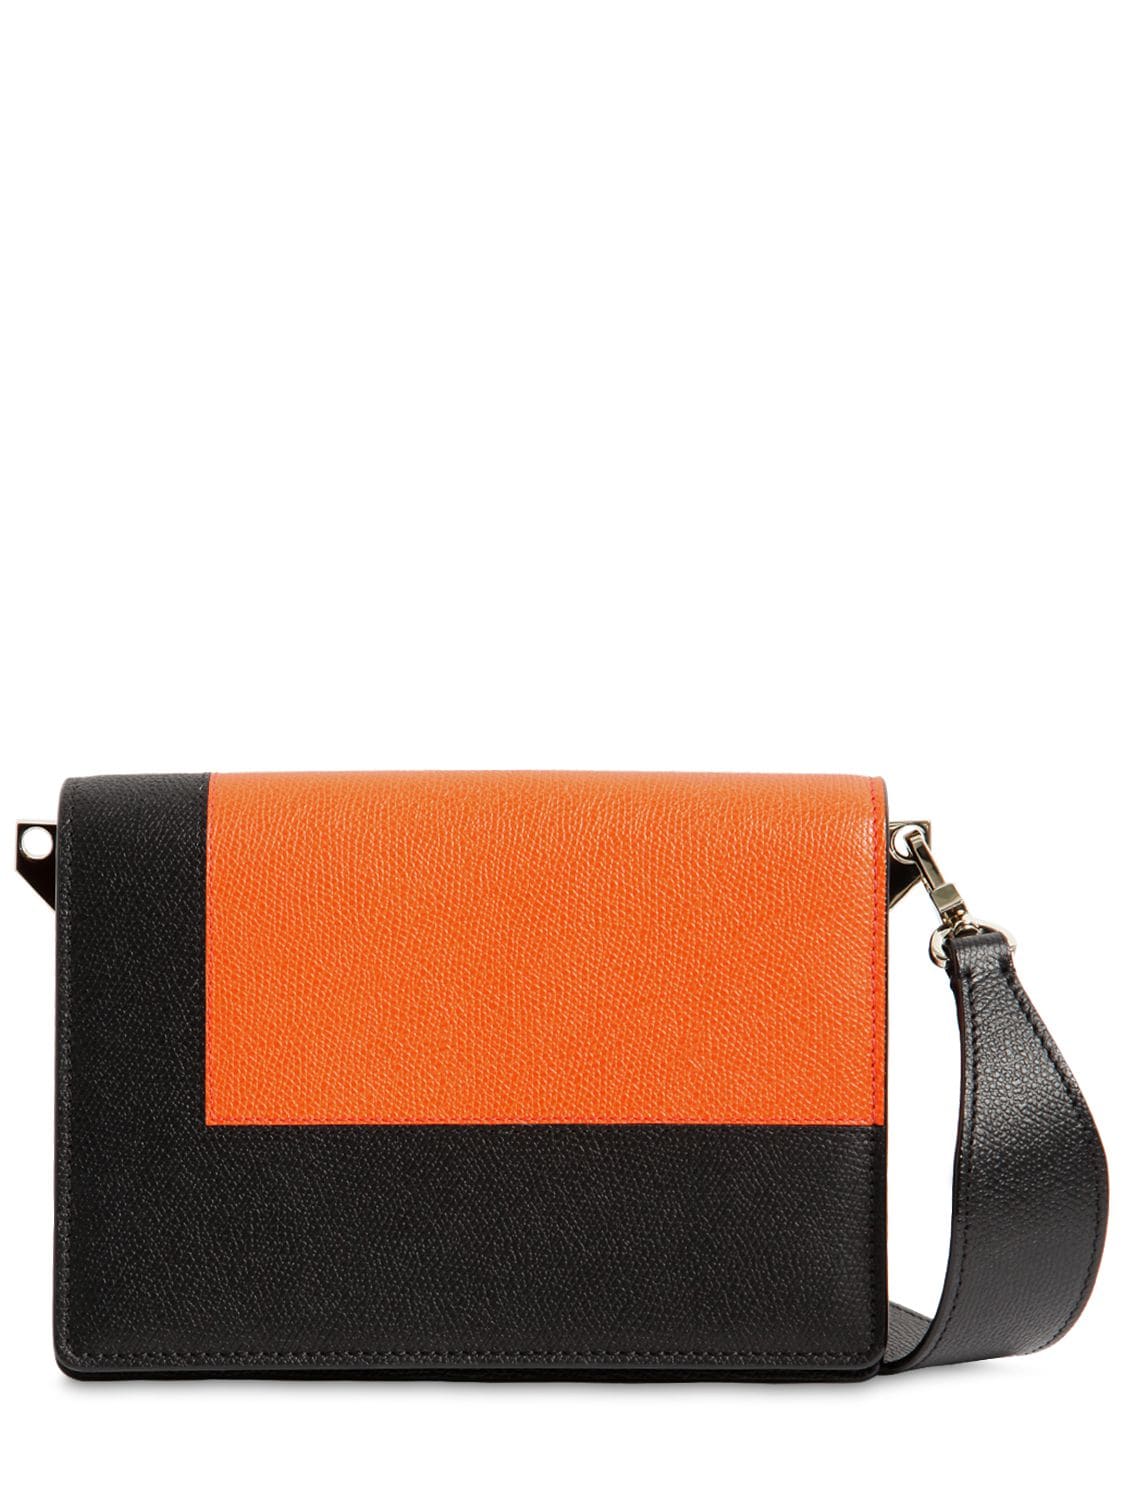 Valextra Small Swing Leather Crossbody Bag In Black,orange